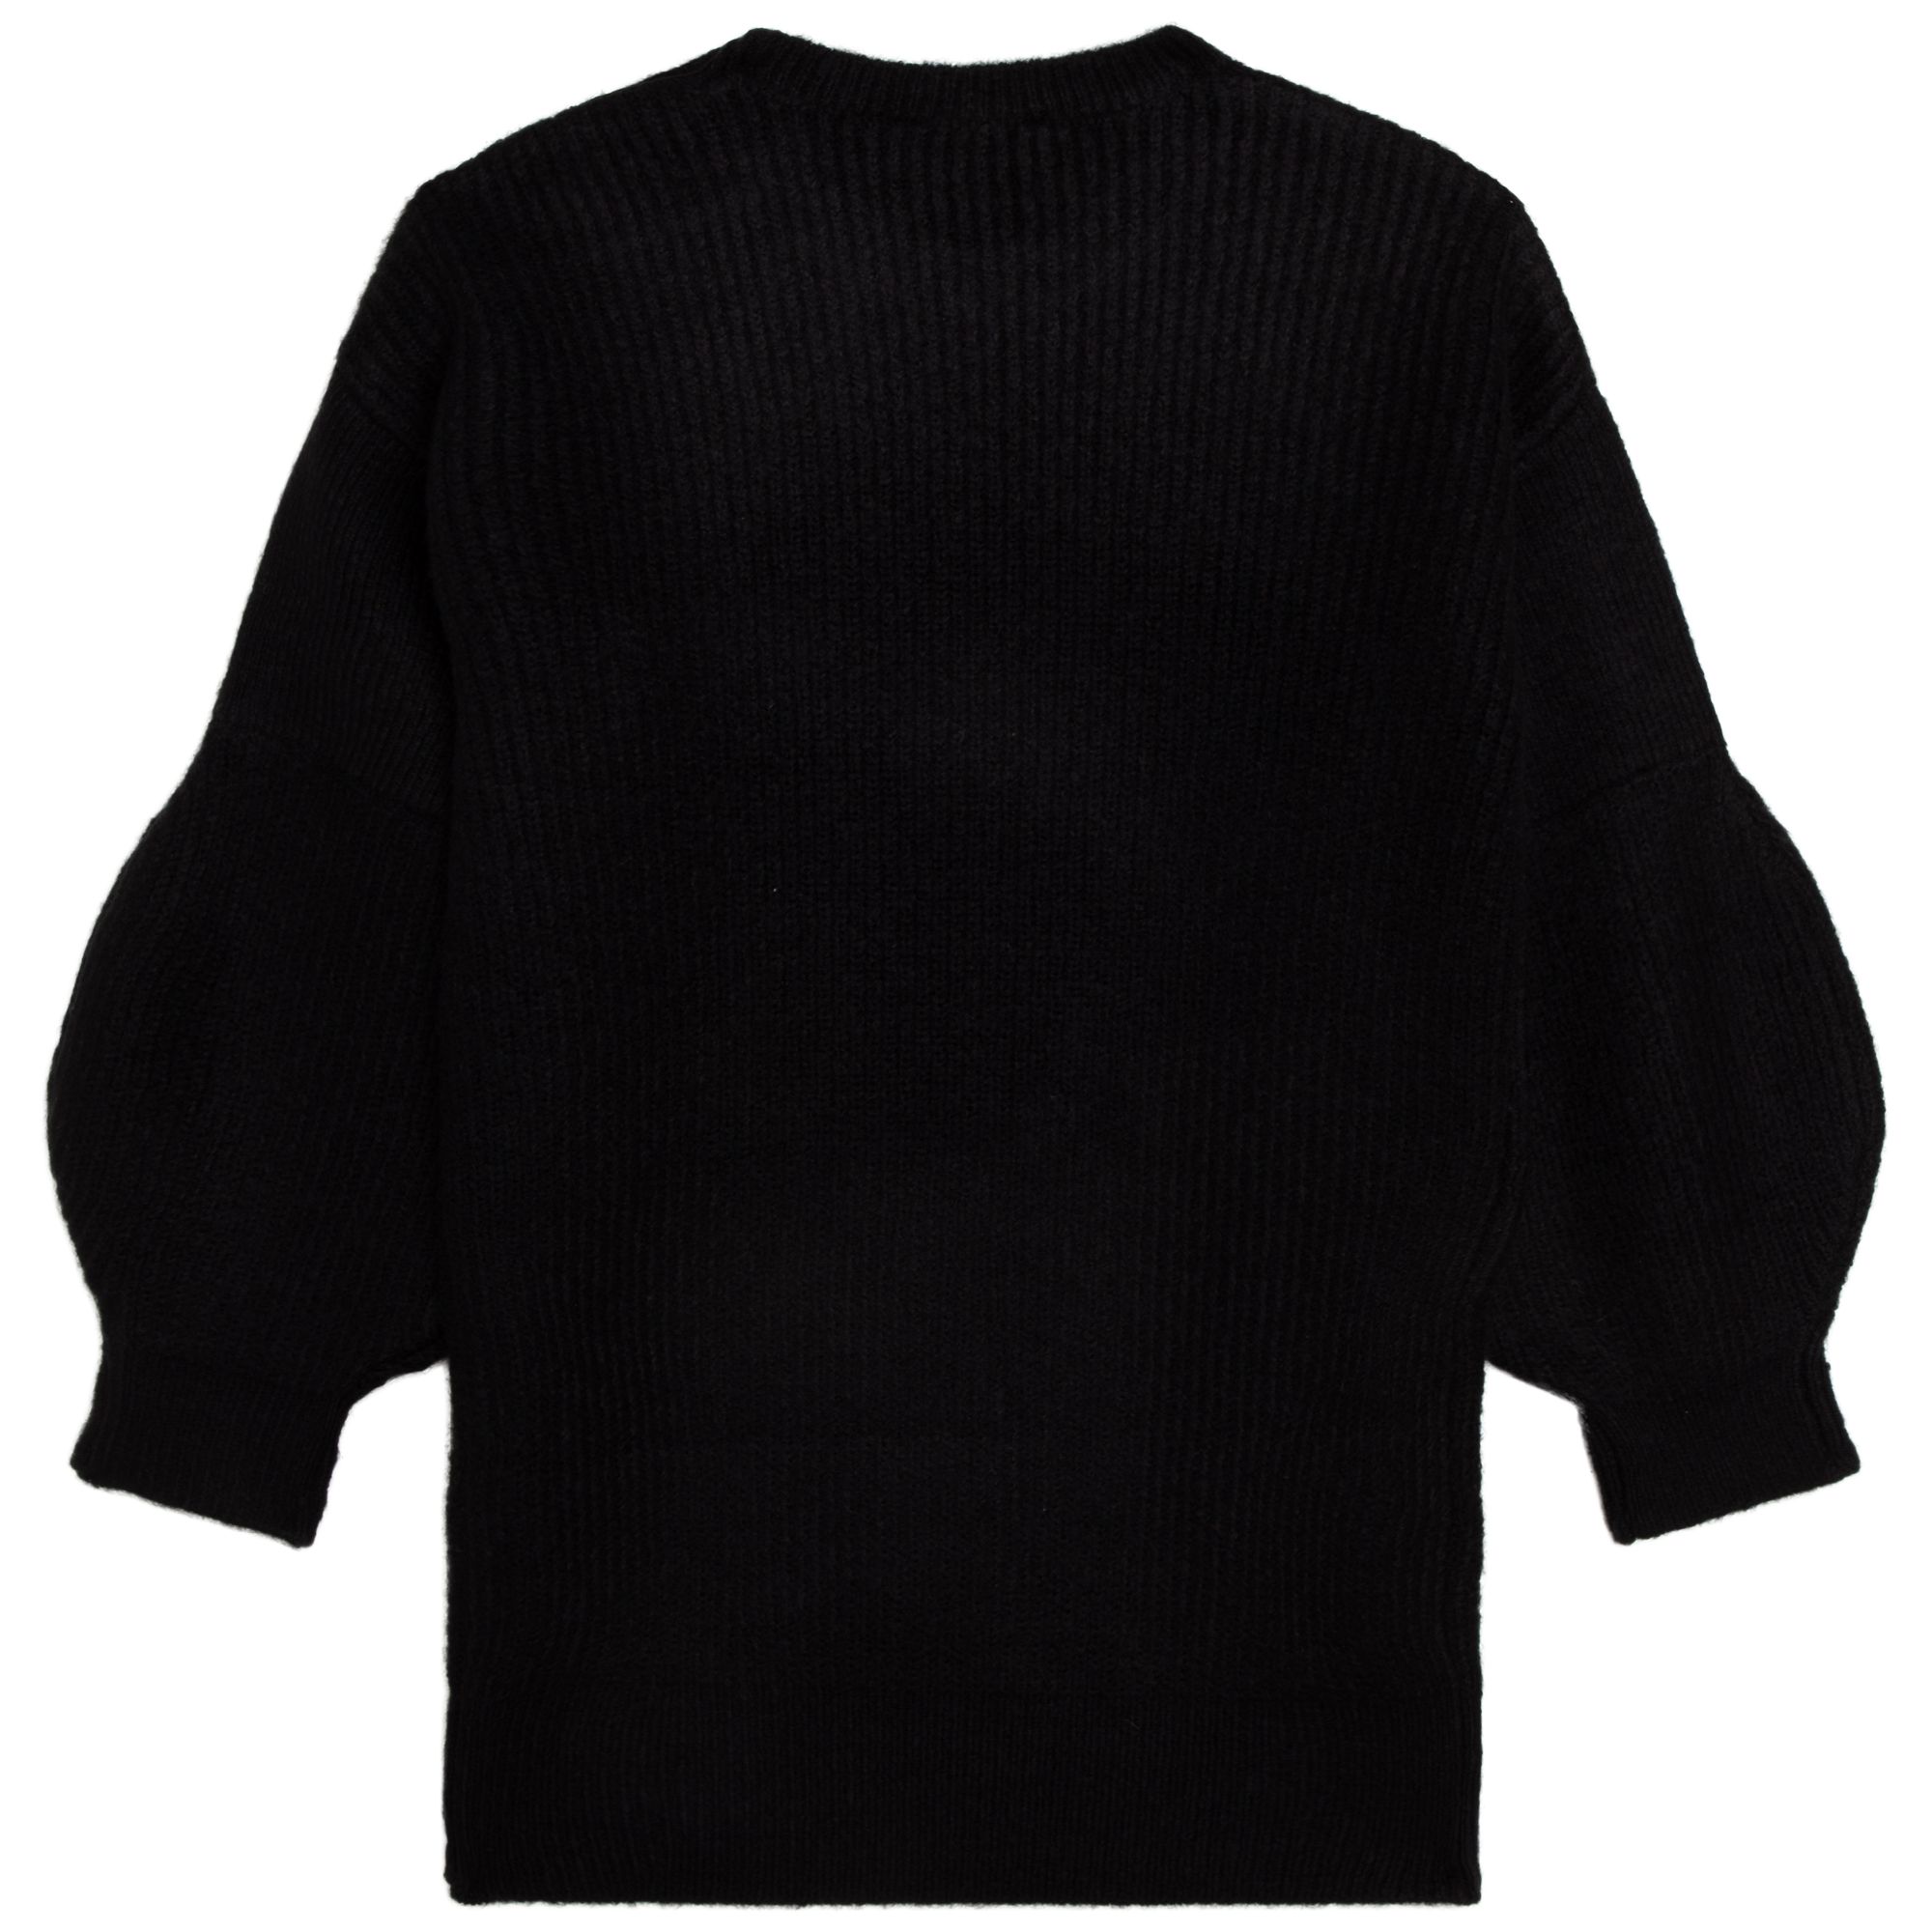 Robe en tricot avec boutons DKNY pour FILLE